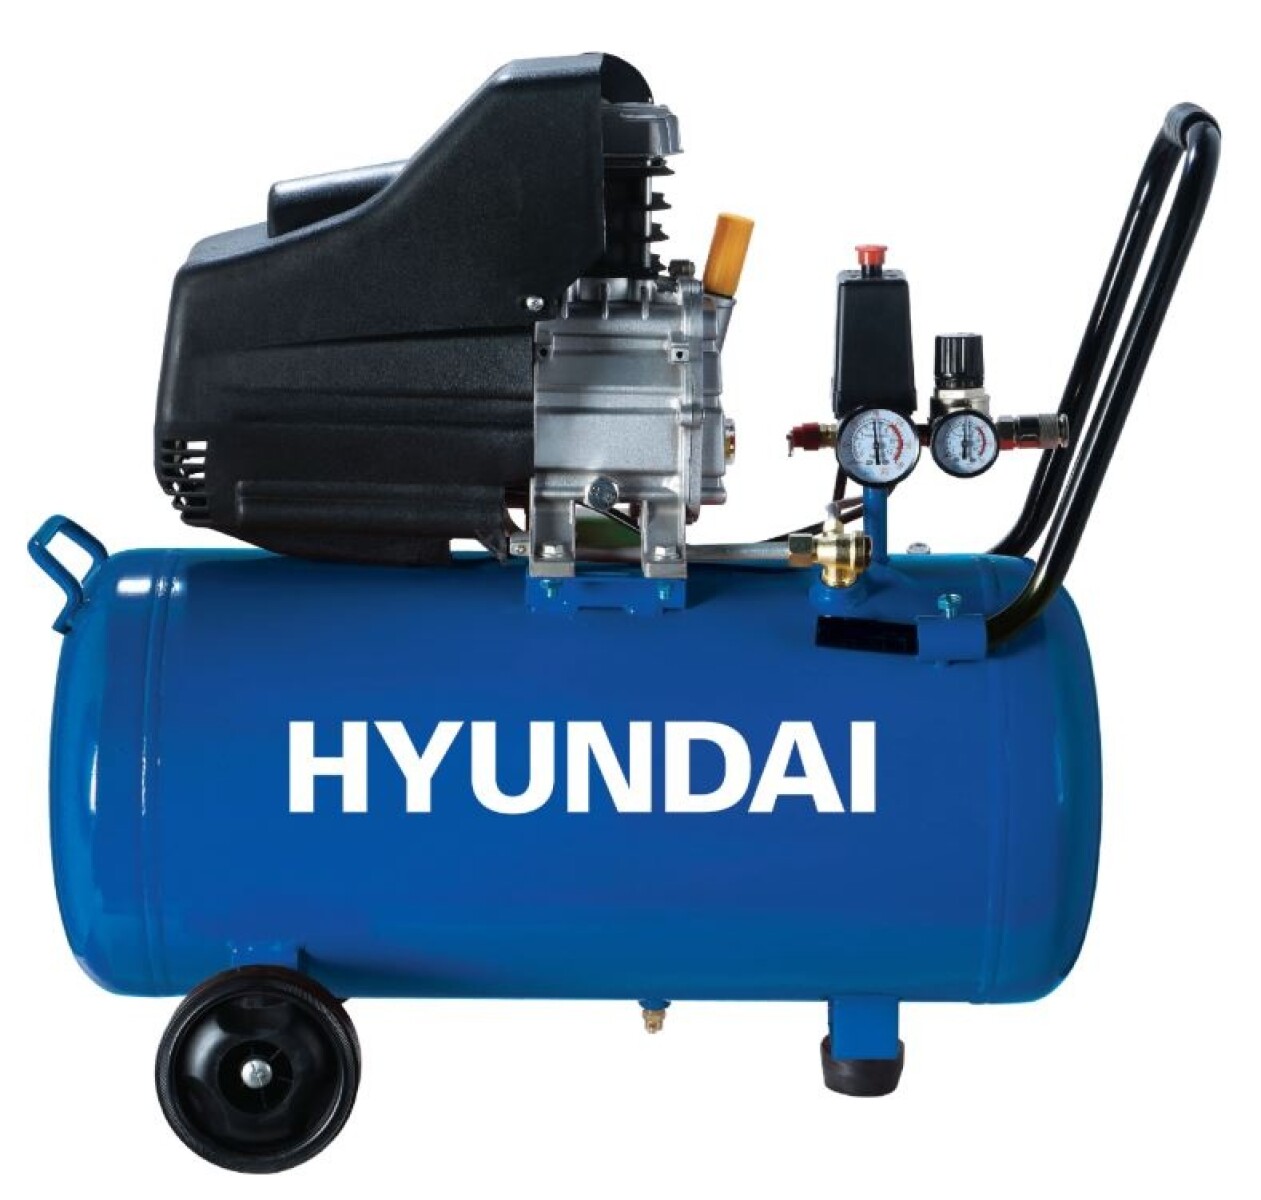 Compresor Hyundai 50l 2.0hp Hyac50de Mo 